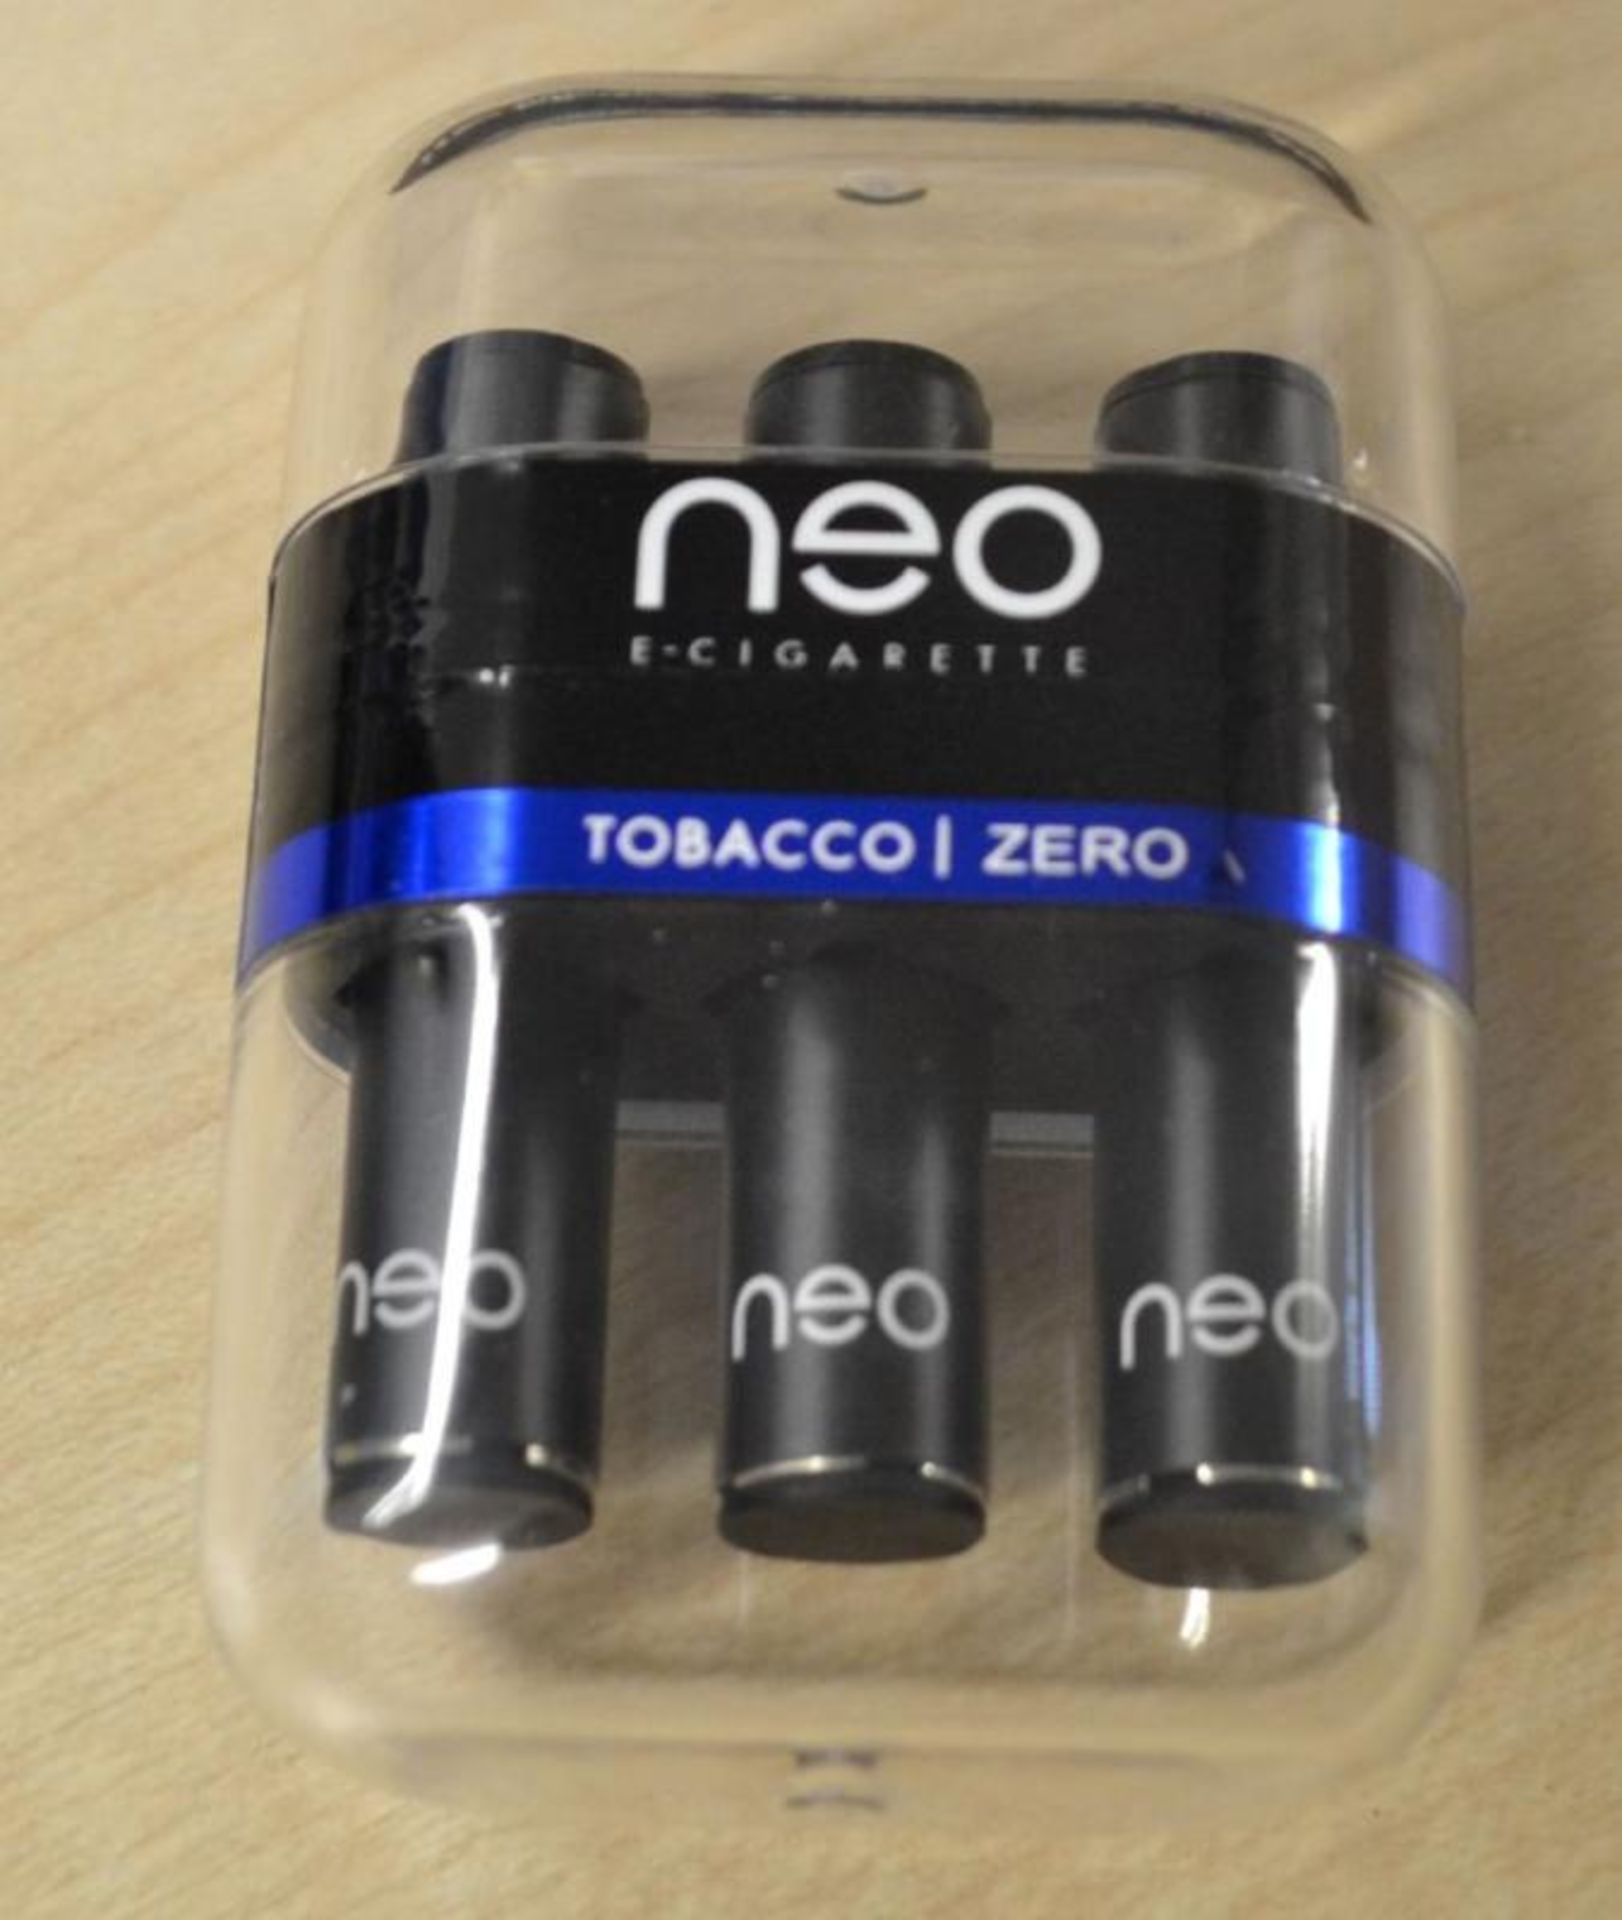 30 x Neo E-Cigarettes Neo Infinity Tobacco Zero Refill Packs - New & Sealed Stock - CL185 - Ref: DRT - Image 8 of 9